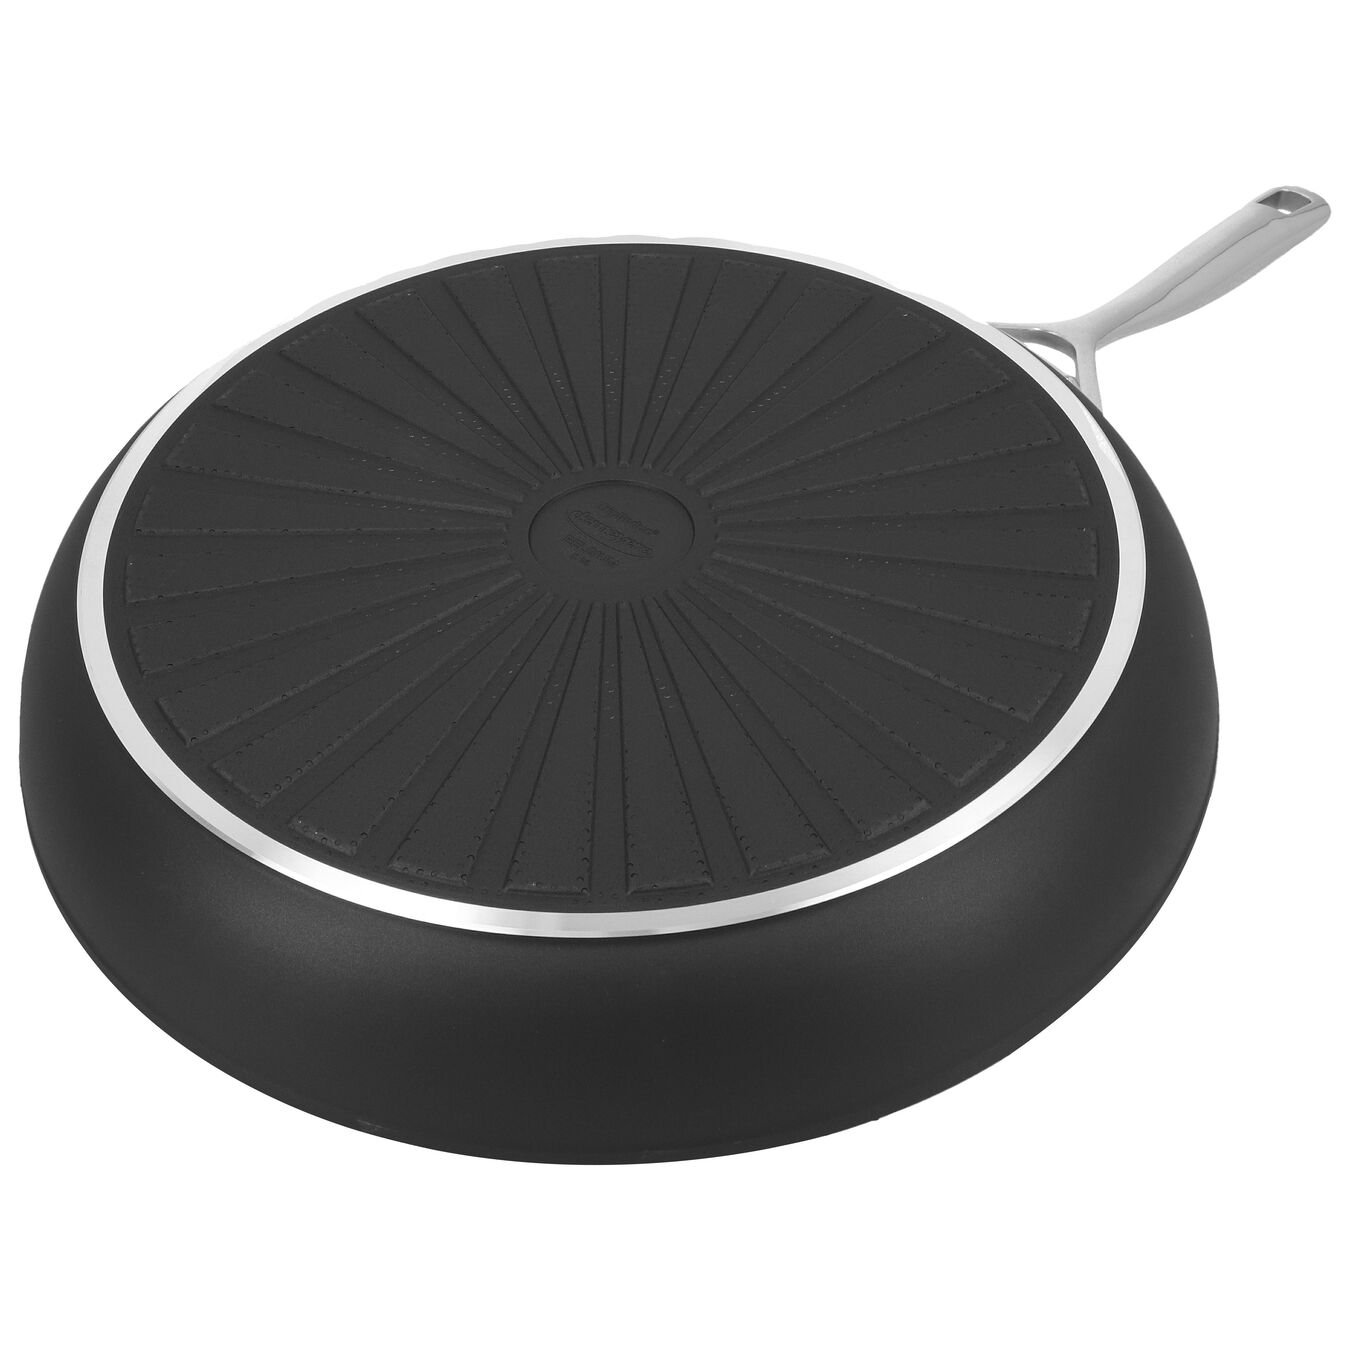 32 cm Aluminum Frying pan silver-black,,large 2